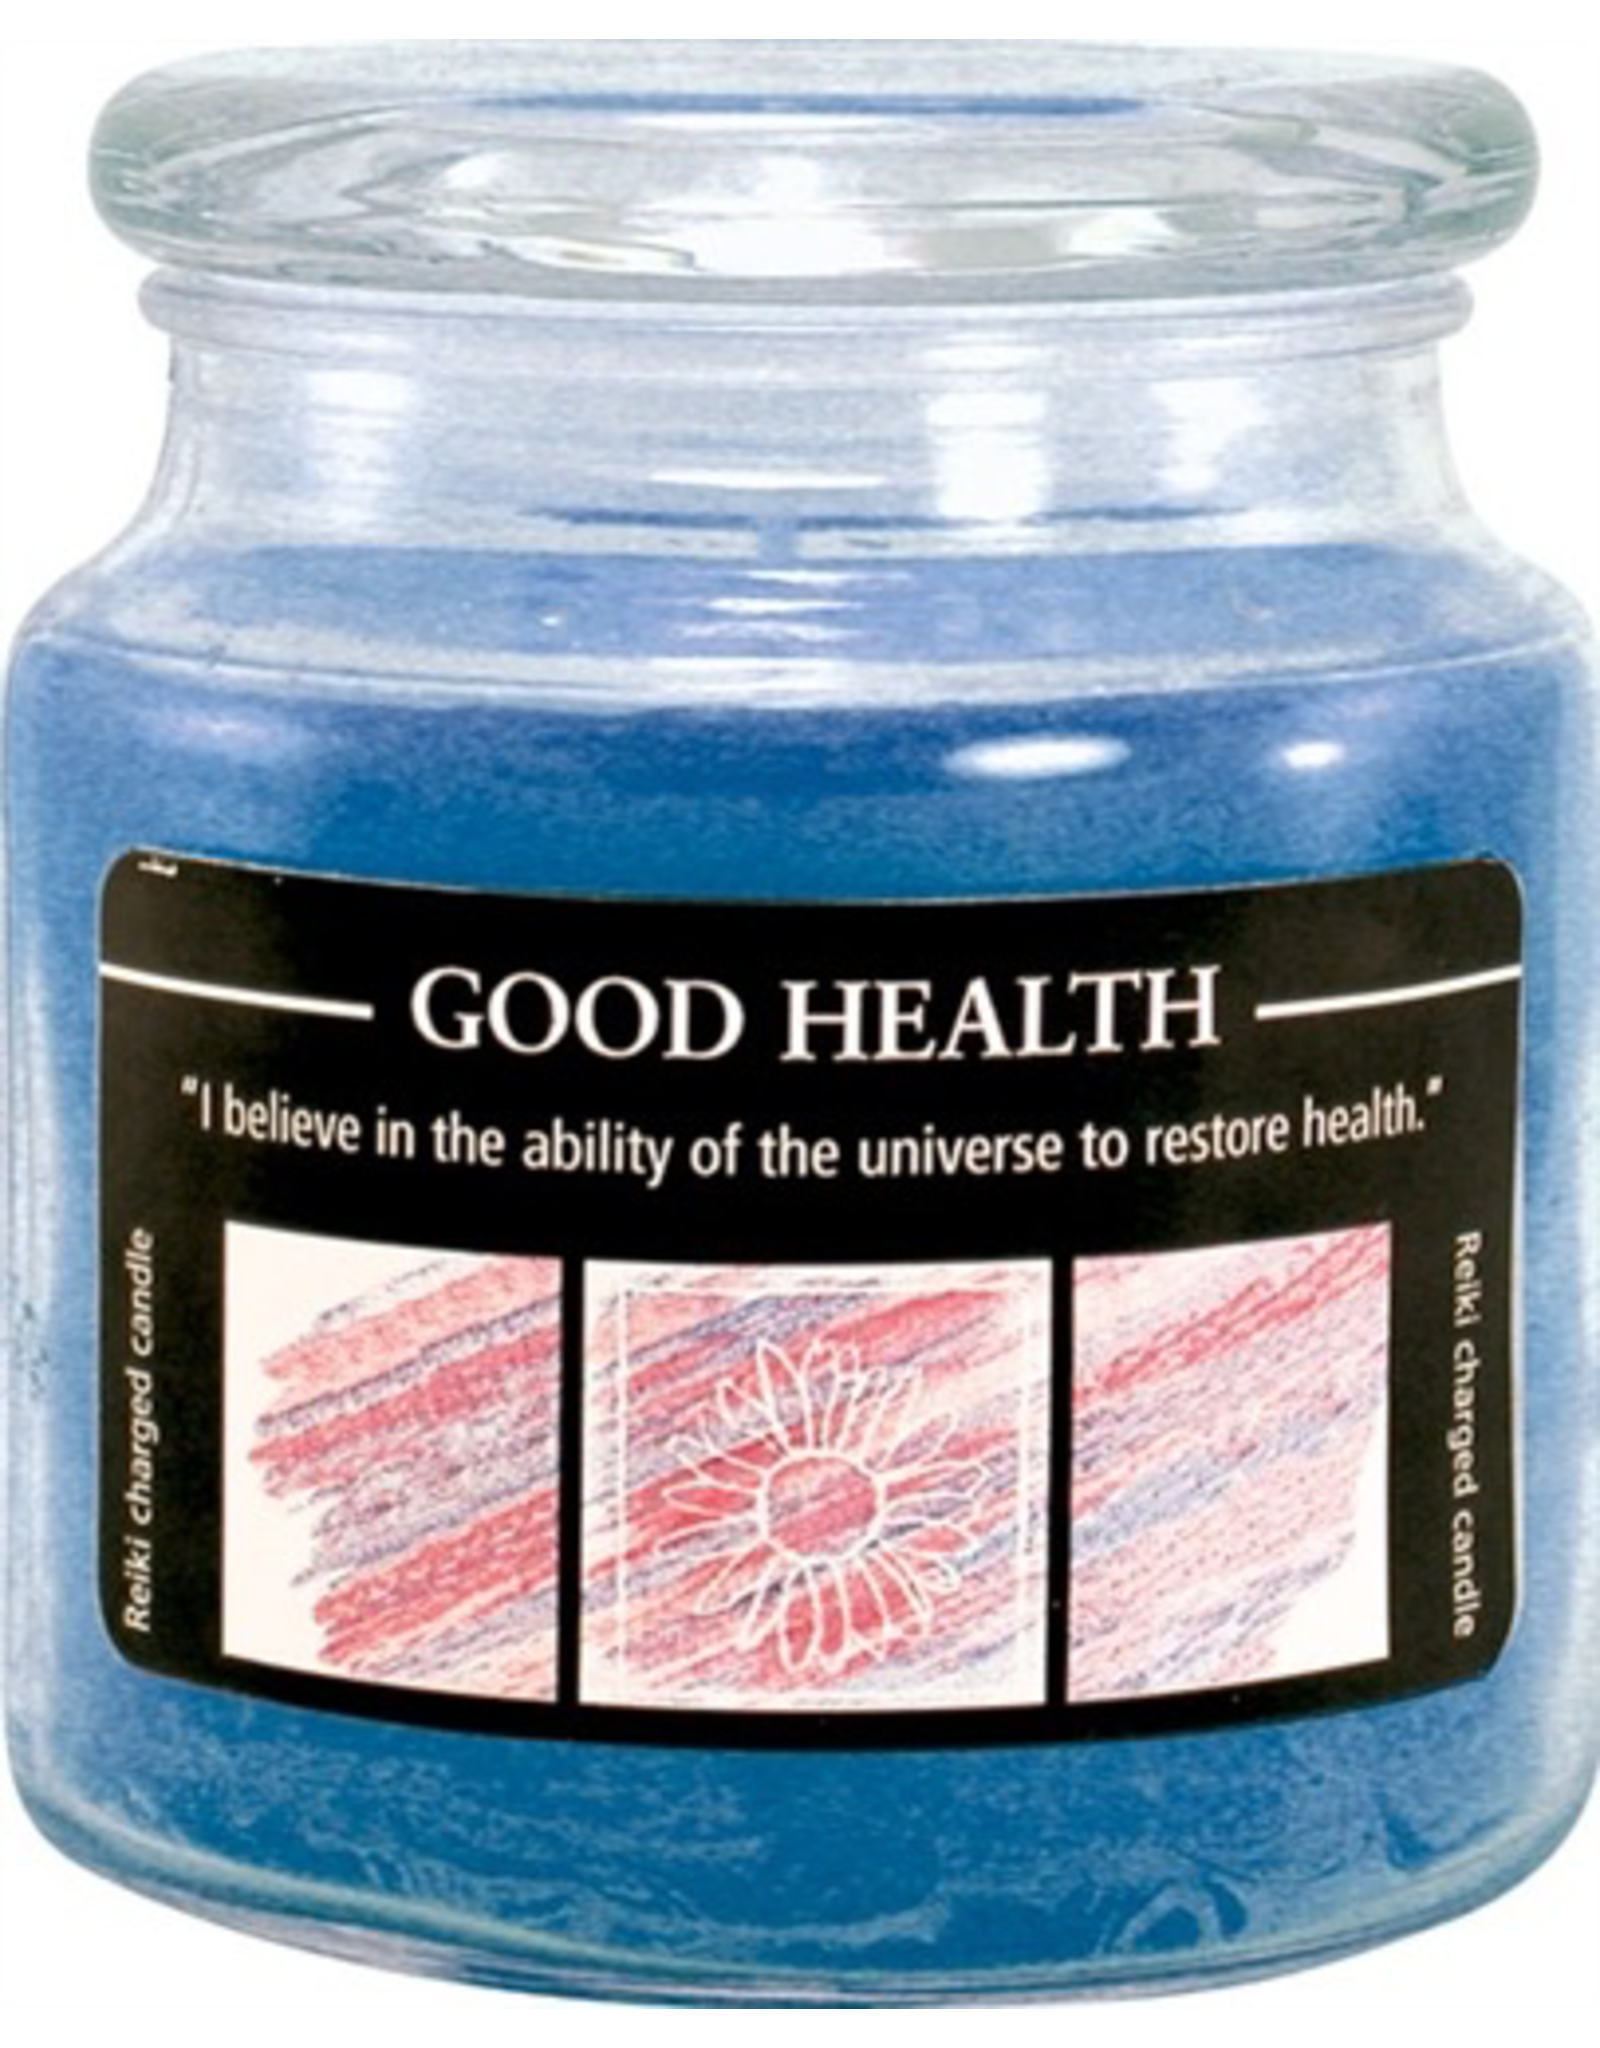 Crystal Journey 16 oz Good Health Jar Candle